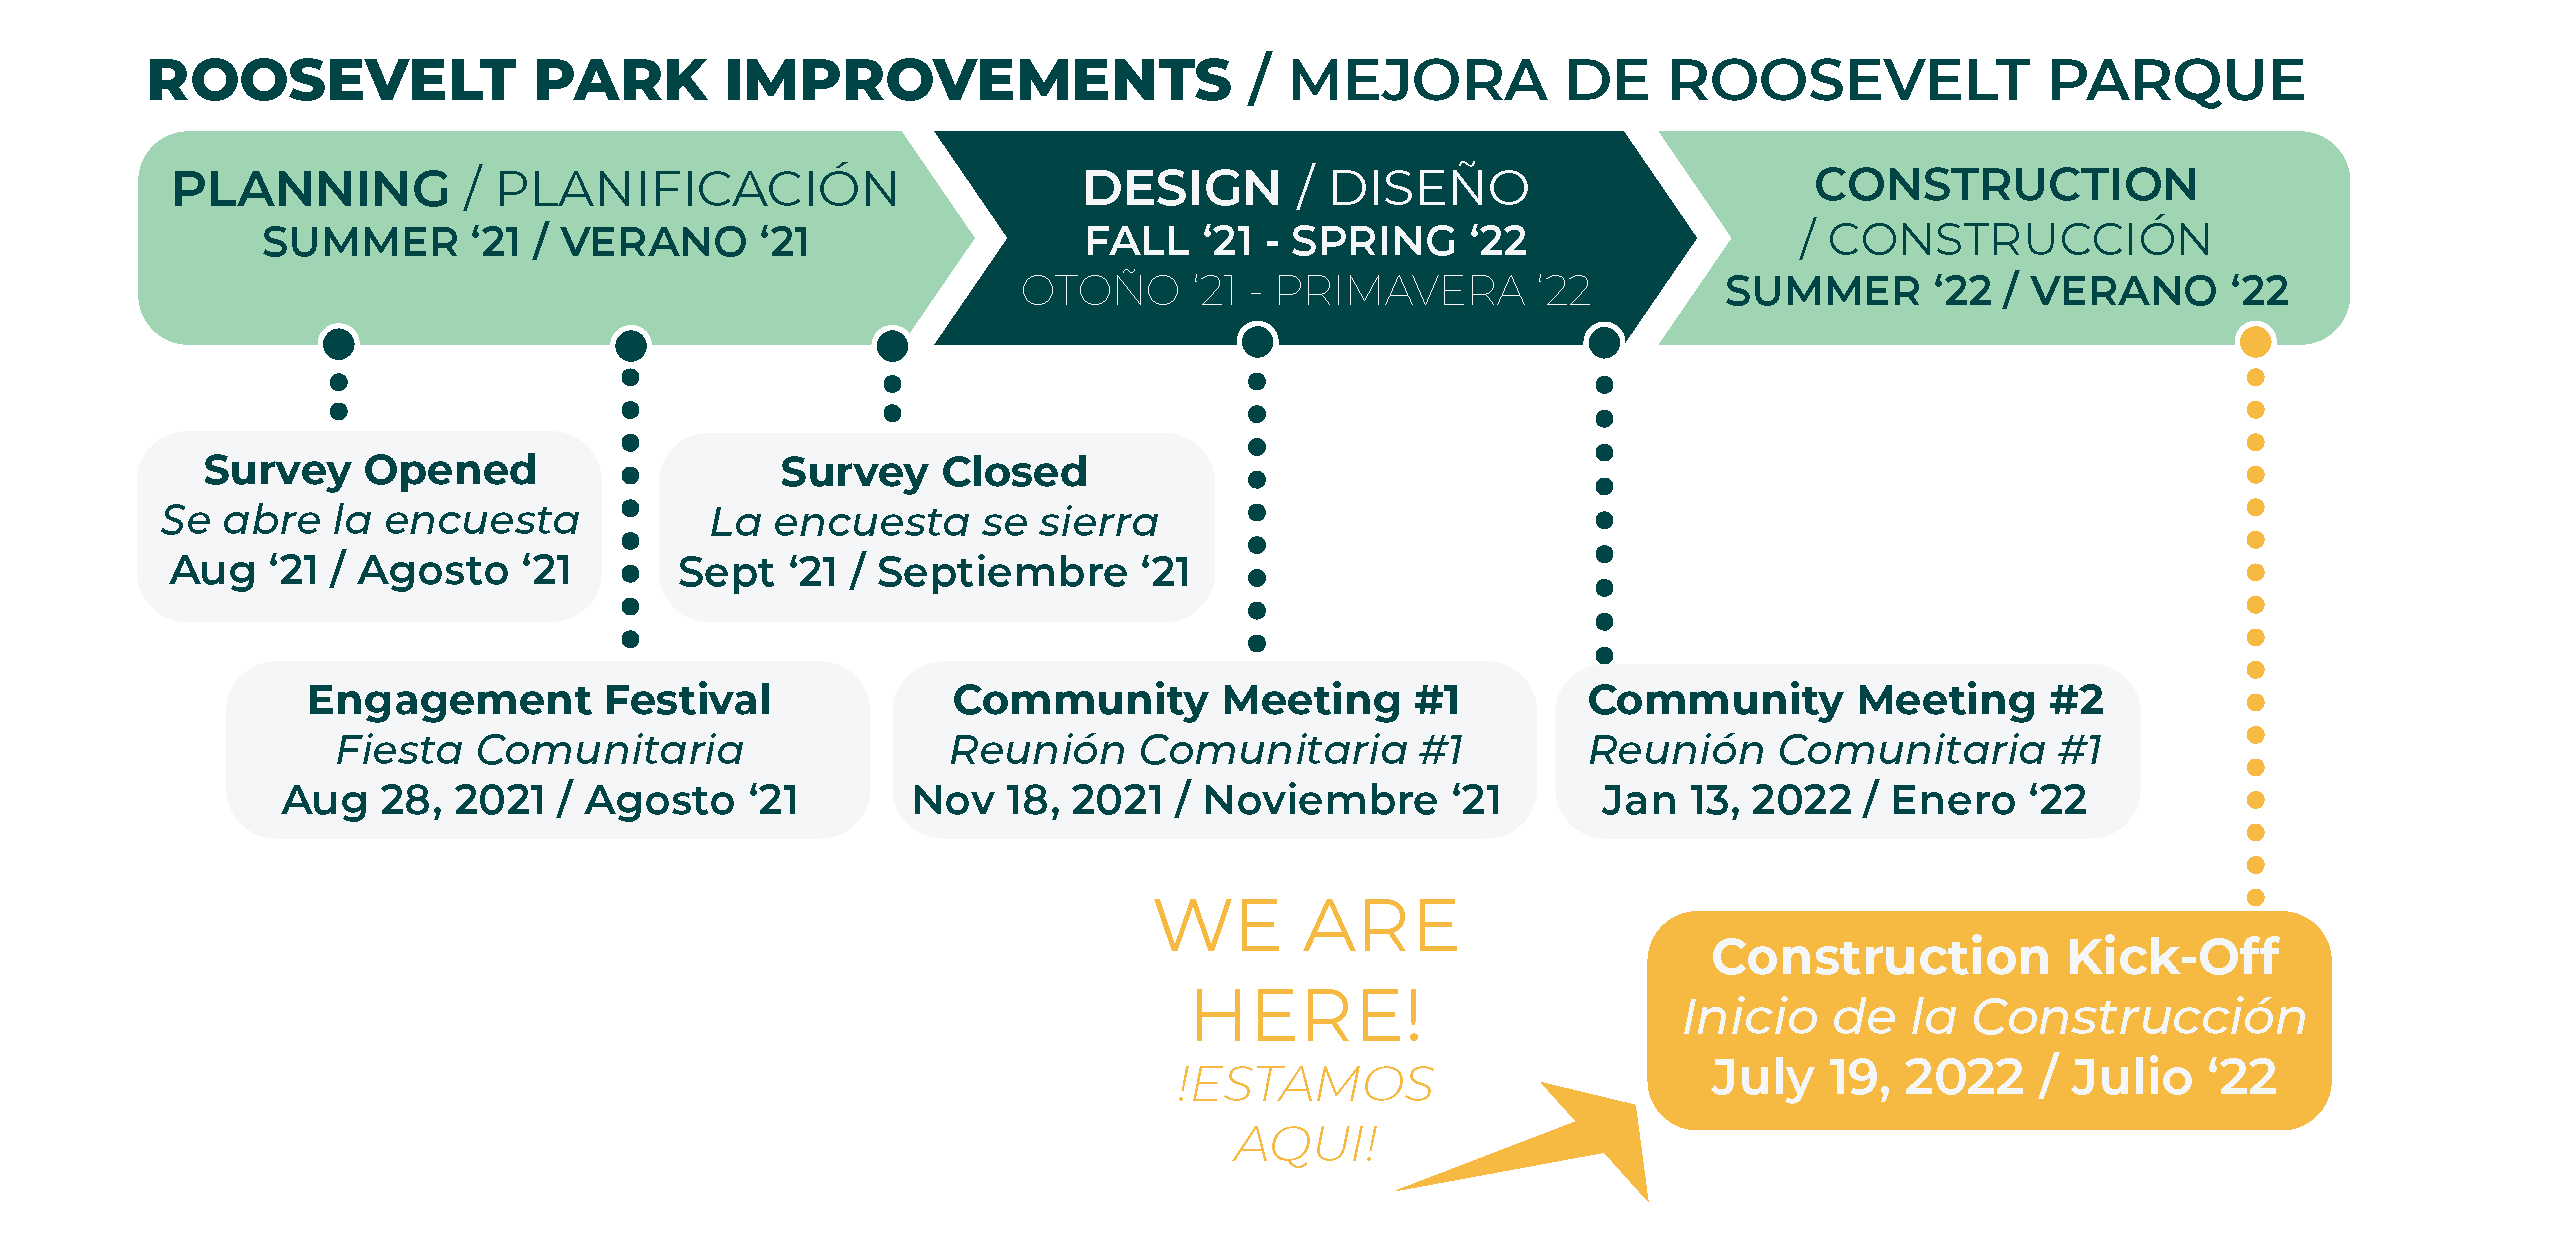 Roosevelt Park Improvement Project Timeline: Survey - August/Sept, Engagement Festival - Aug 28, Community Meeting #1 - Nov, 18, Community Meeting #2 - Jan 13, Construction Kickoff - July 19